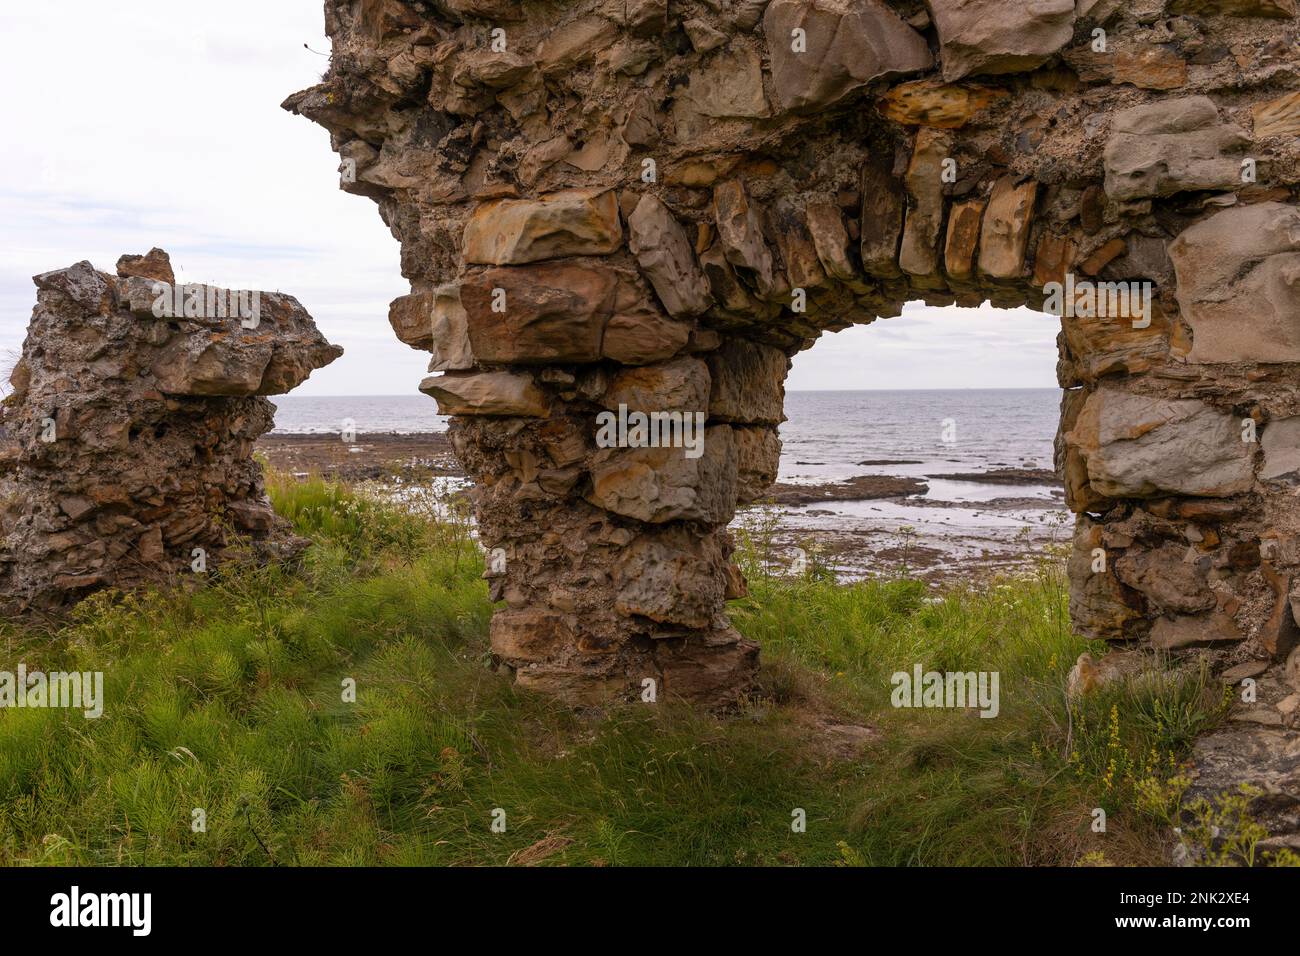 SCOZIA, EUROPA - Arco di pietra, Fife Coastal Trail, vicino a Pittenweem. Foto Stock